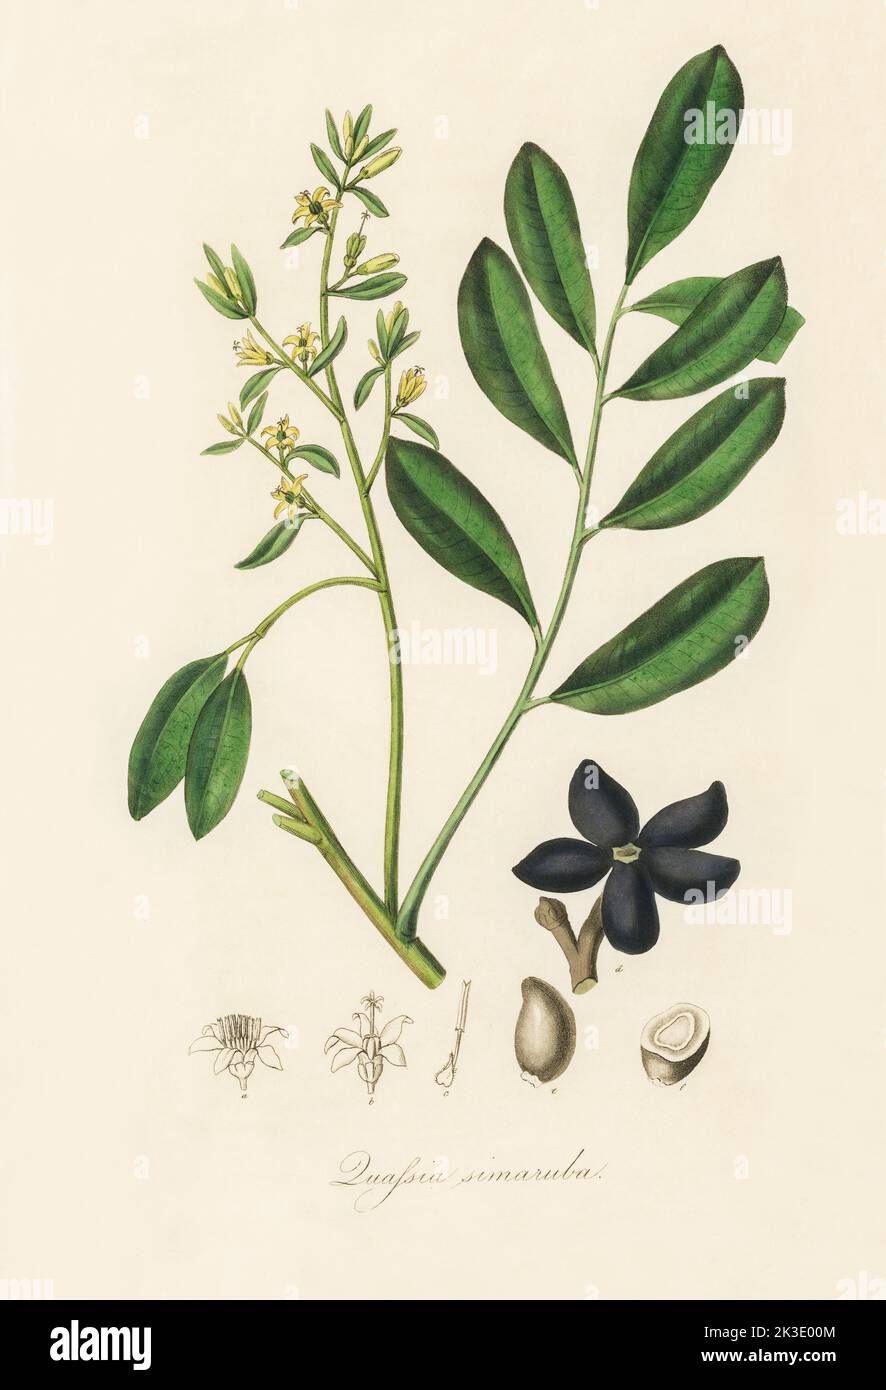 Lualsia simarula illustration from Medical Botany (1836) by John Stephenson and James Morss Churchill. Stock Photo